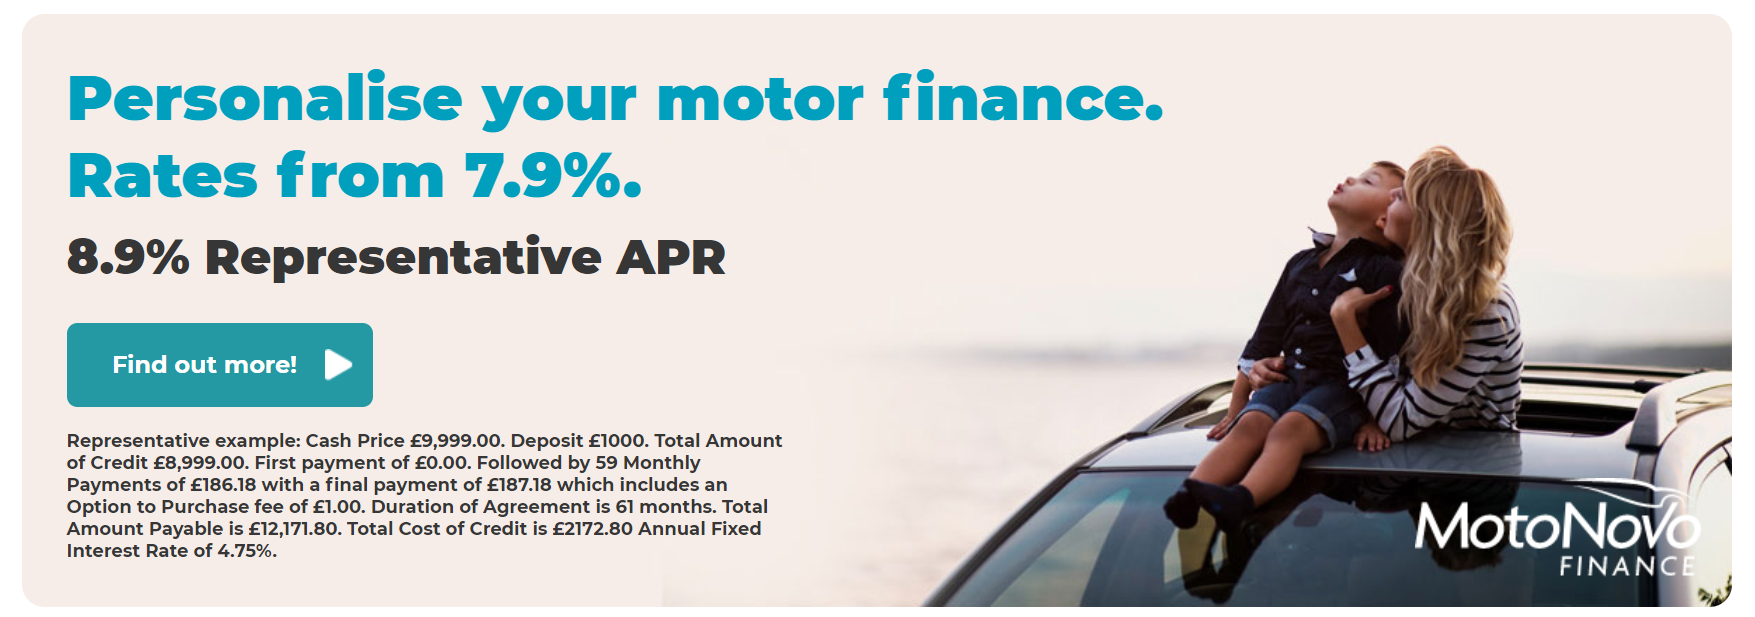 Motorate car finance advert